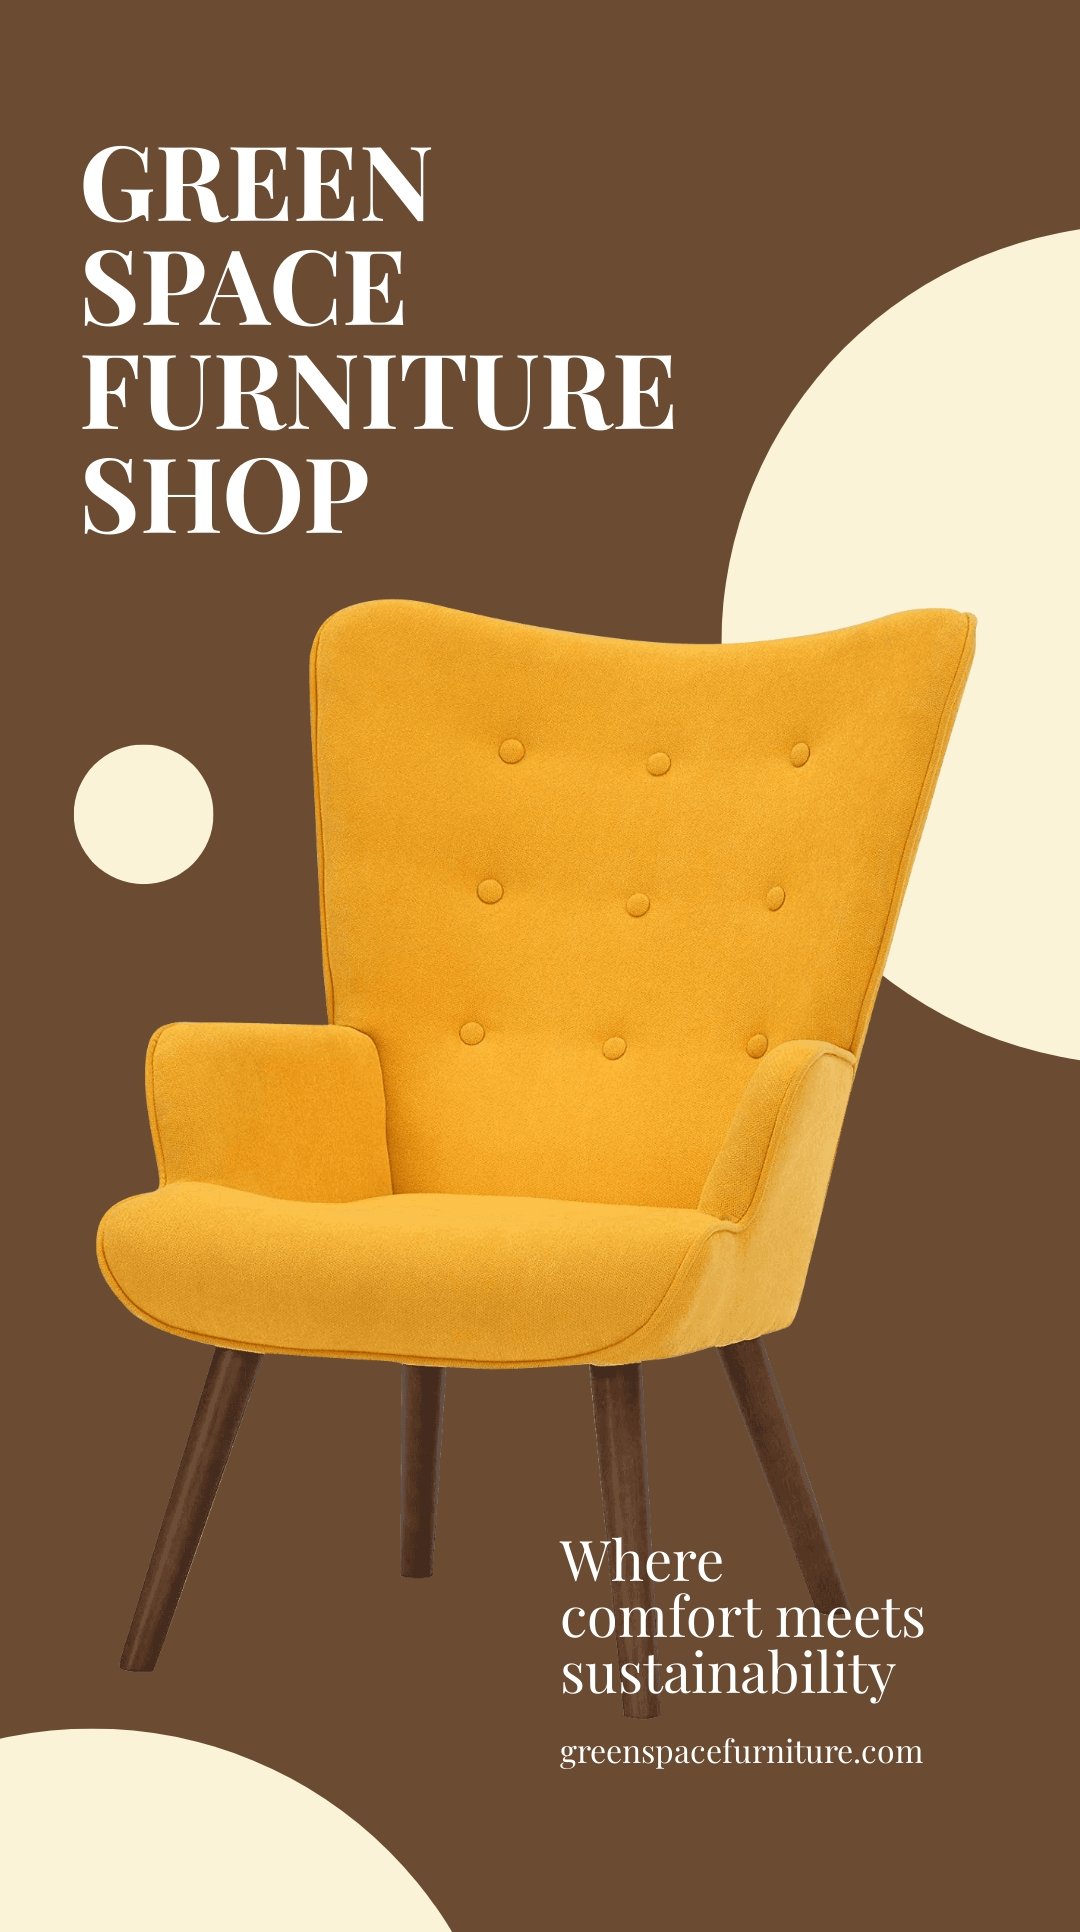 Online Furniture Shop WhatsApp Post Template